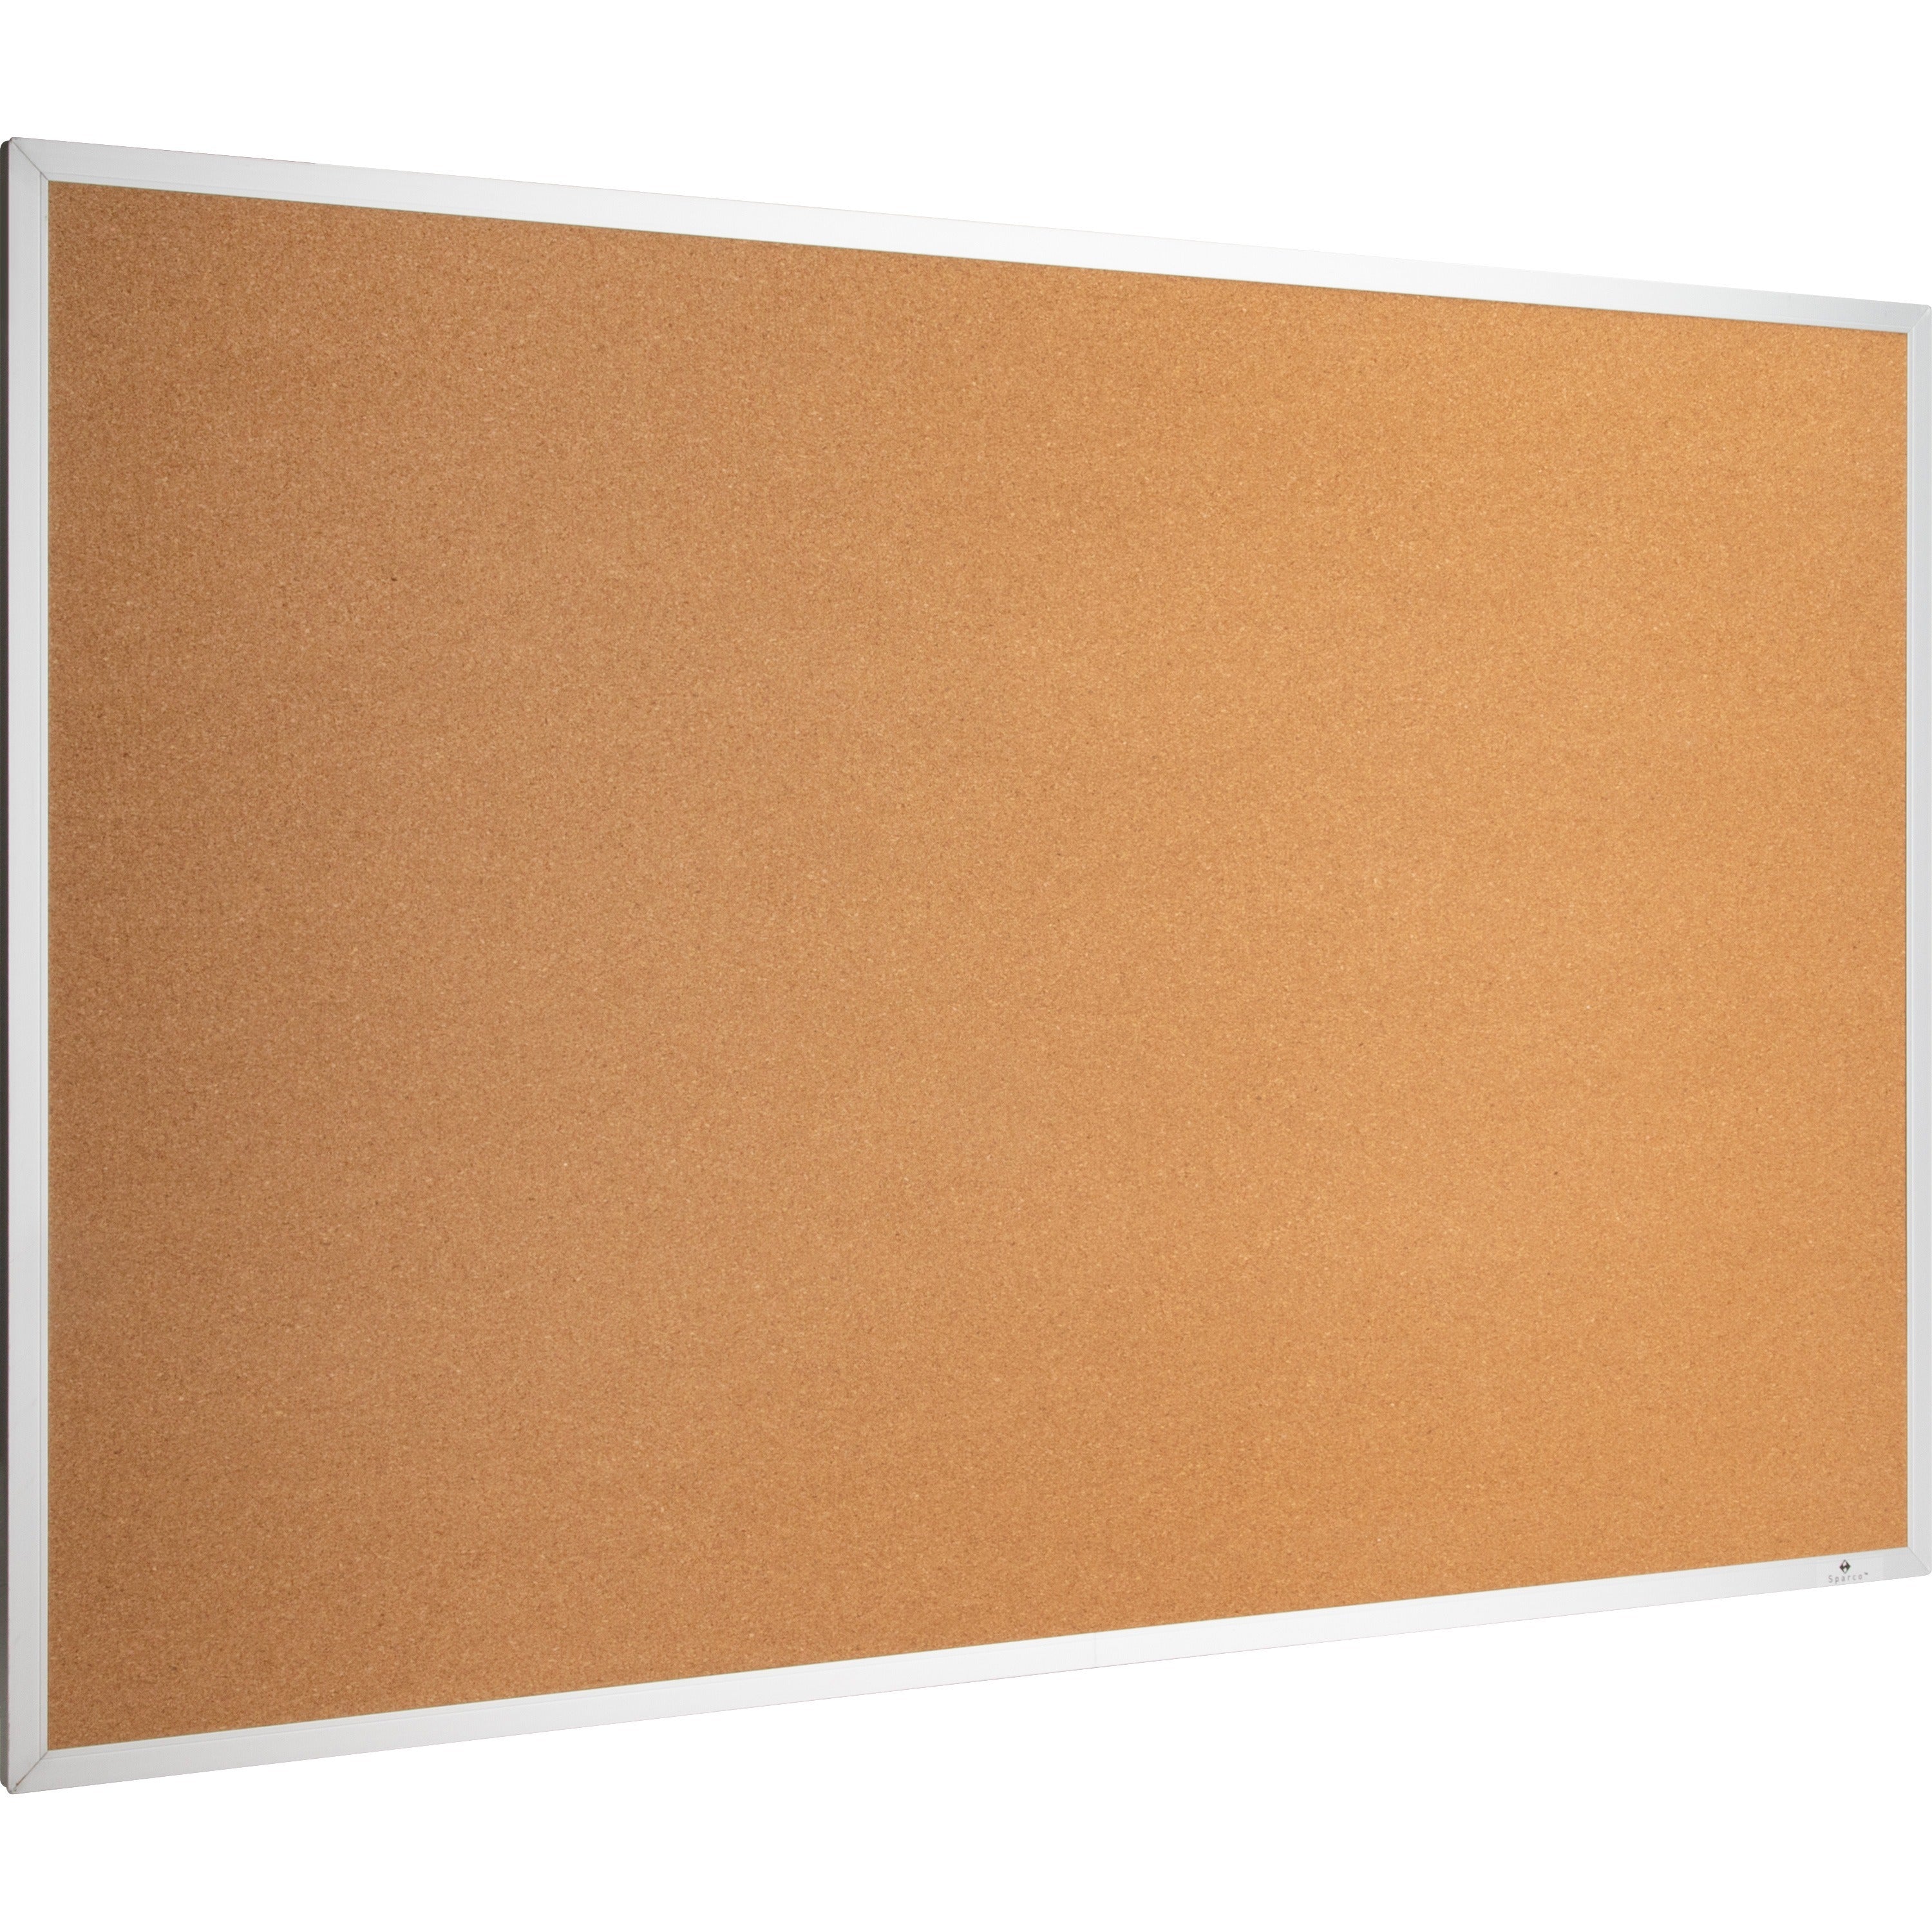 lorell-bulletin-board-24-height-x-36-width-cork-surface-long-lasting-warp-resistant-brown-aluminum-frame-1-each_llr19764 - 4